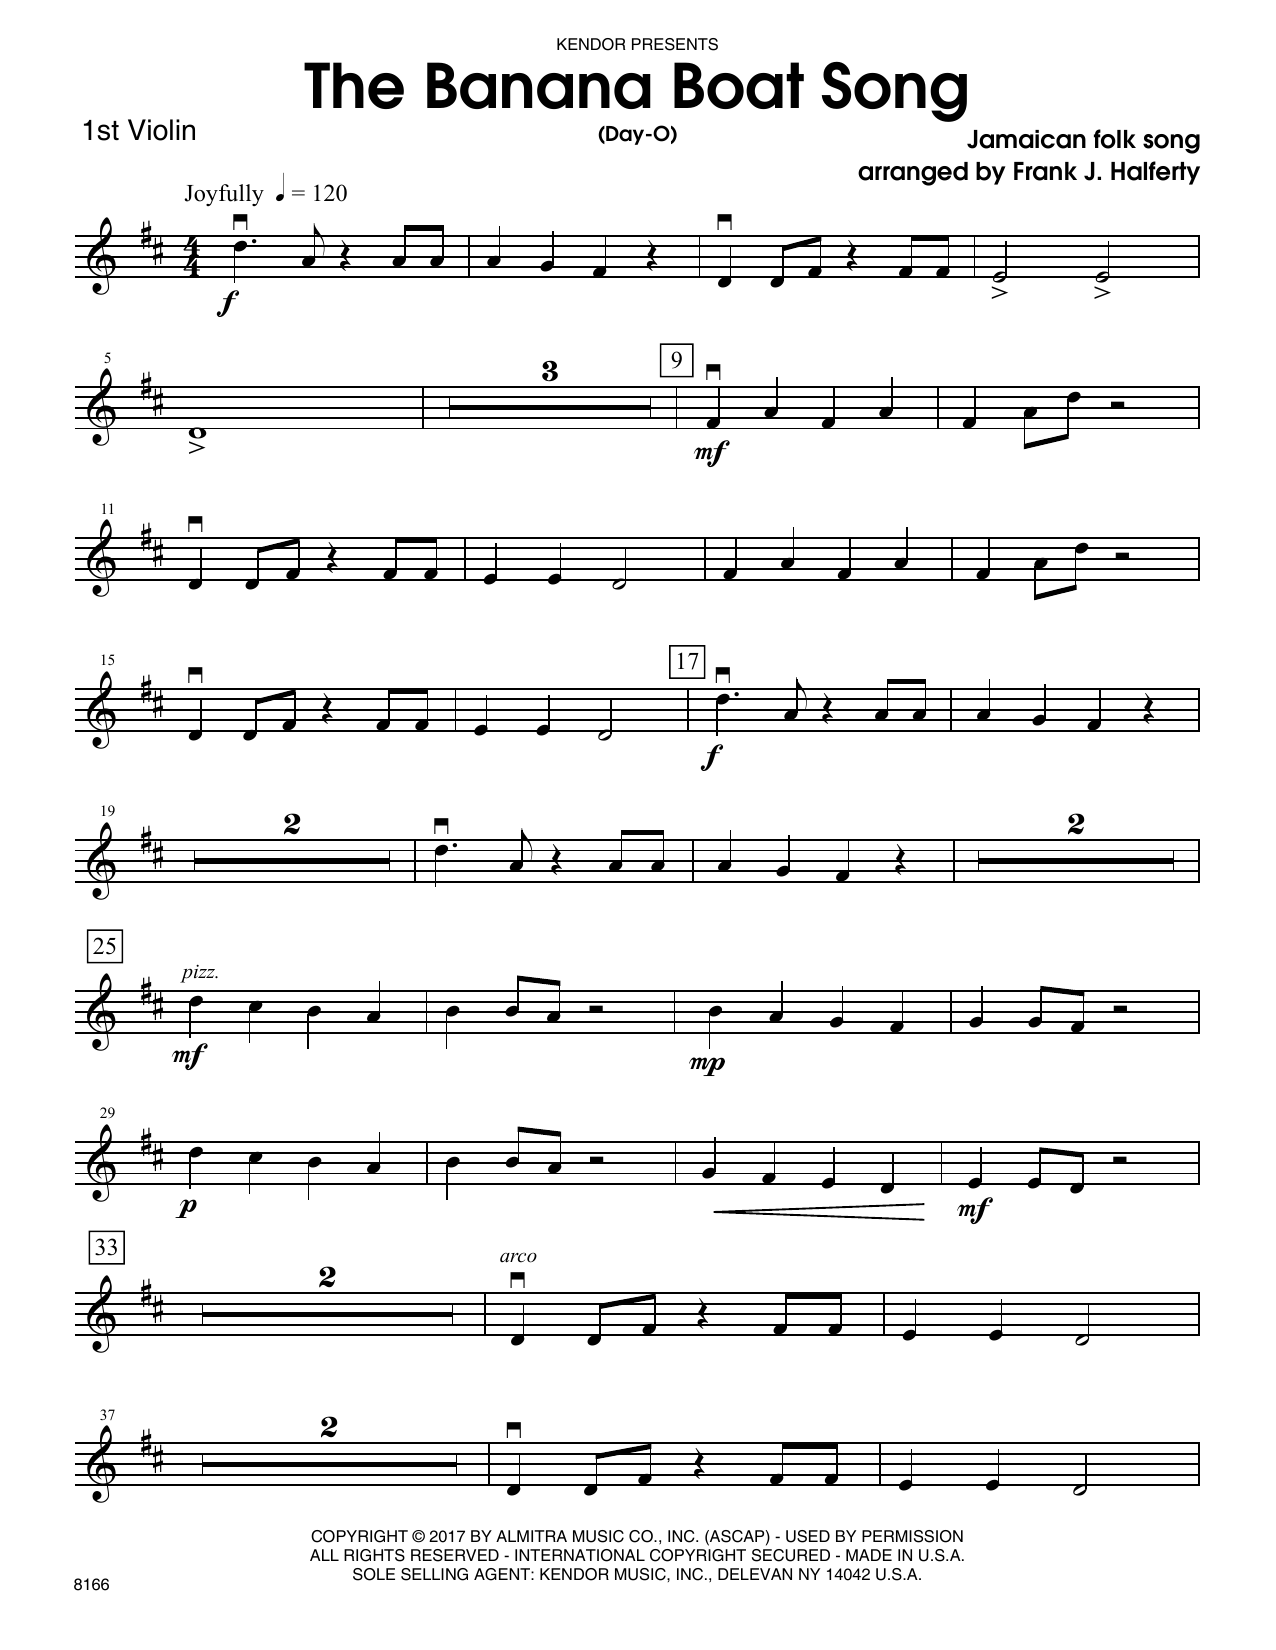 Frank J. Halferty Banana Boat Song, The (Day-O) - 1st Violin sheet music notes printable PDF score